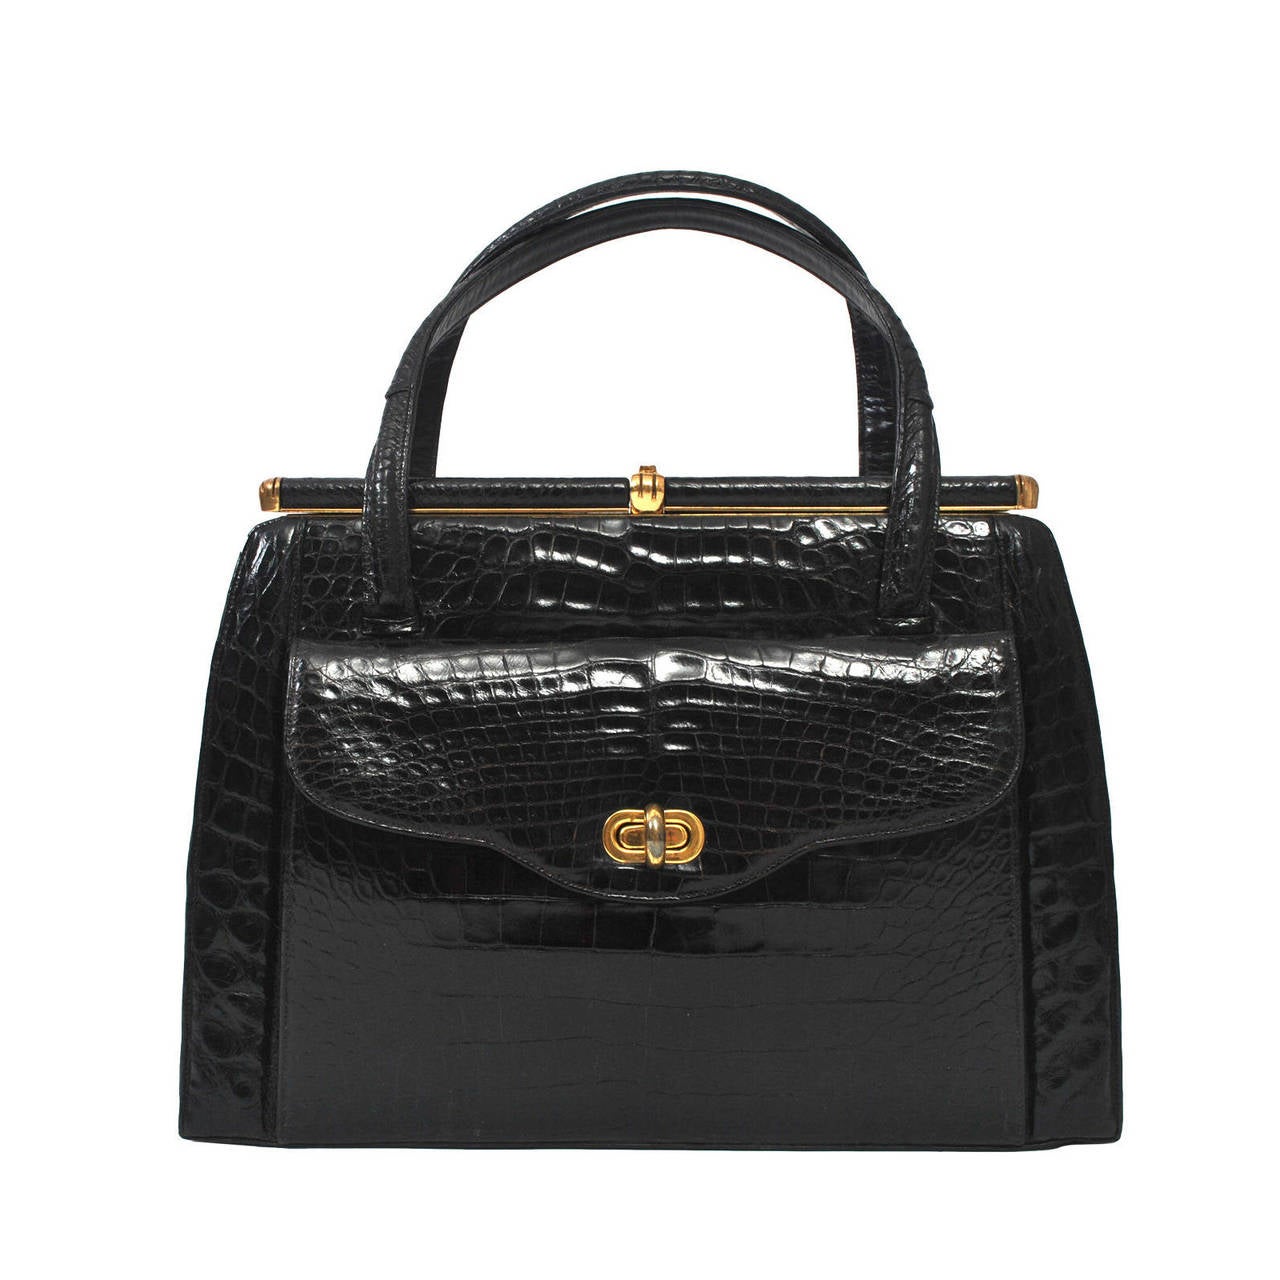 Elizabeth Arden 1960s Black Alligator Handbag